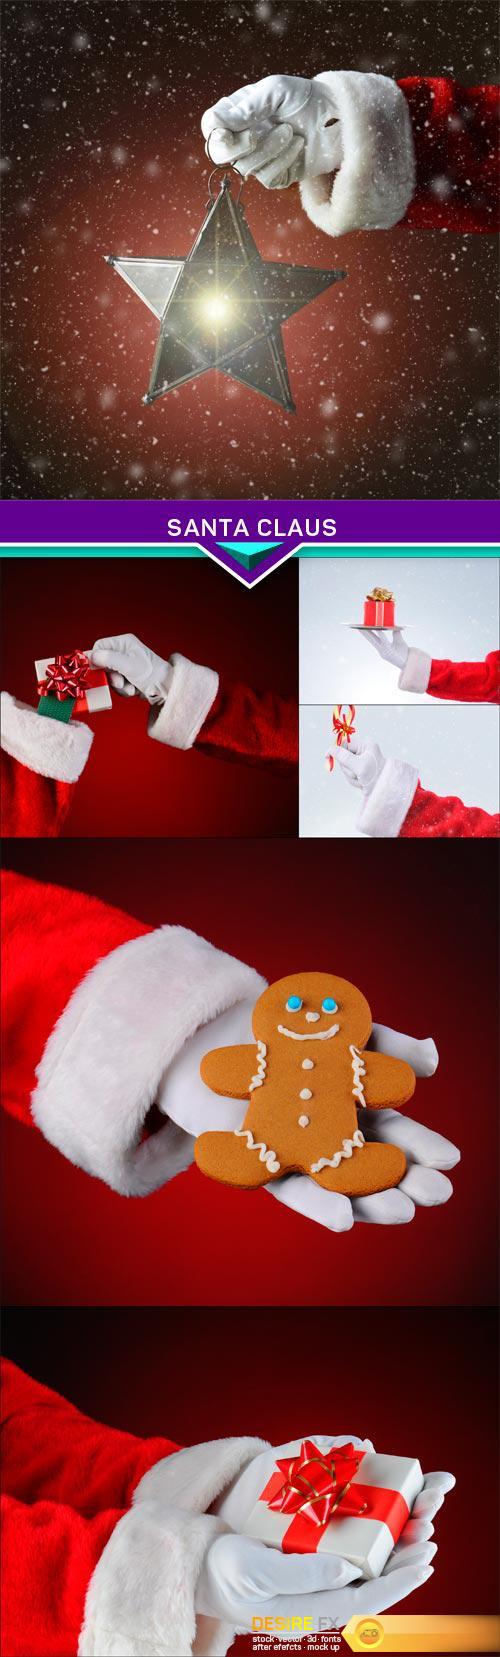 Santa Claus Holding a Small Christmas Present 6X JPEG